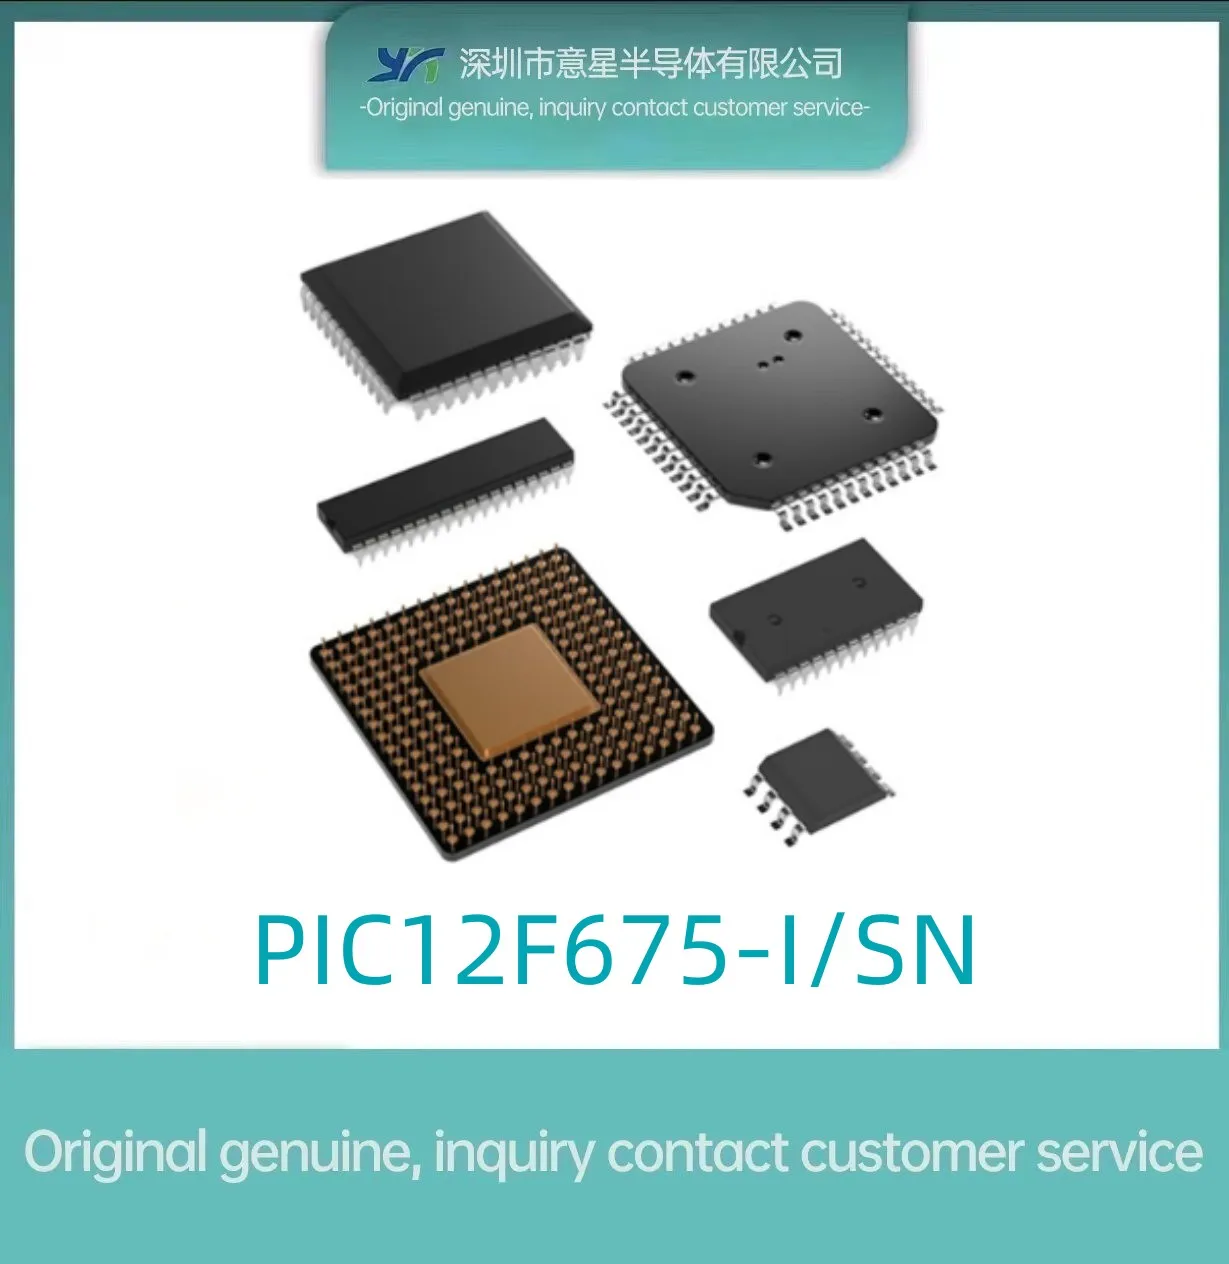 PIC12F675-I/SN Pakett SOP8 8-bitine Mikrokontroller - Originaal ehtne